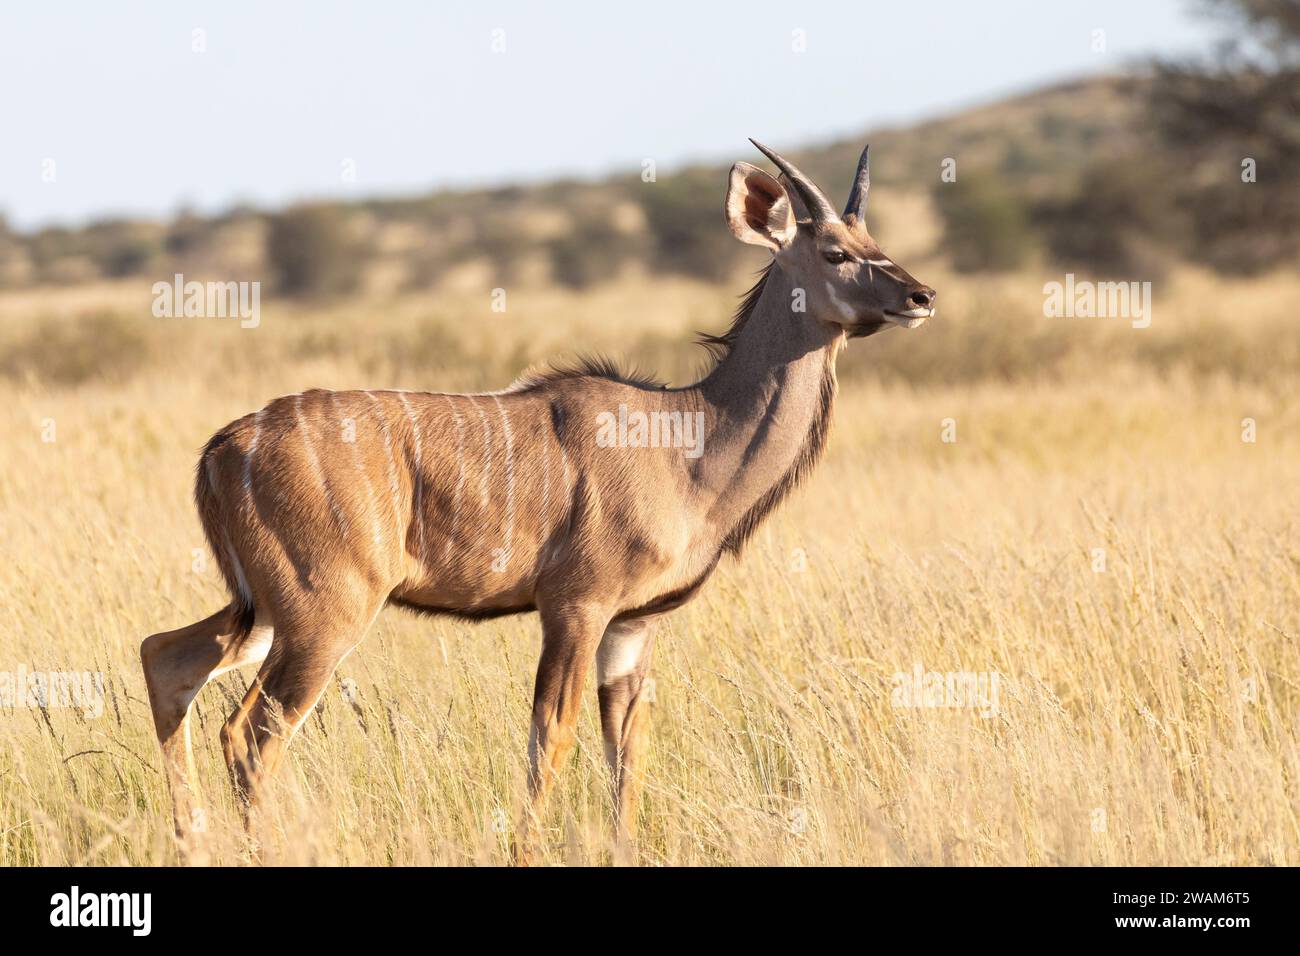 Greater Kudu (Tragelaphus strepsiceros) giovane toro sub-adulto, Kgalagadi Transborder Park, Kalahari, Capo settentrionale, Sudafrica Foto Stock